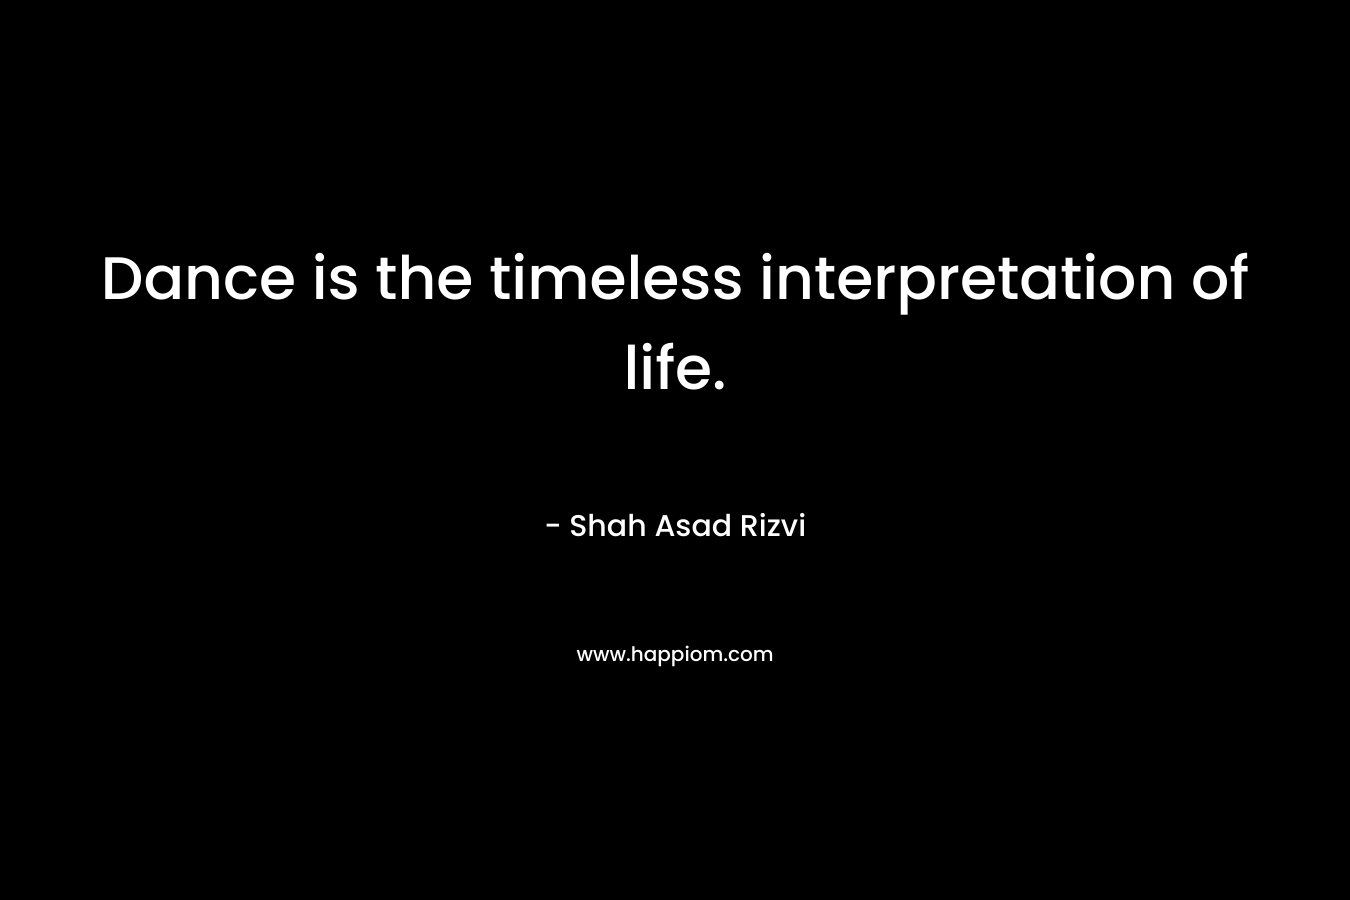 Dance is the timeless interpretation of life.